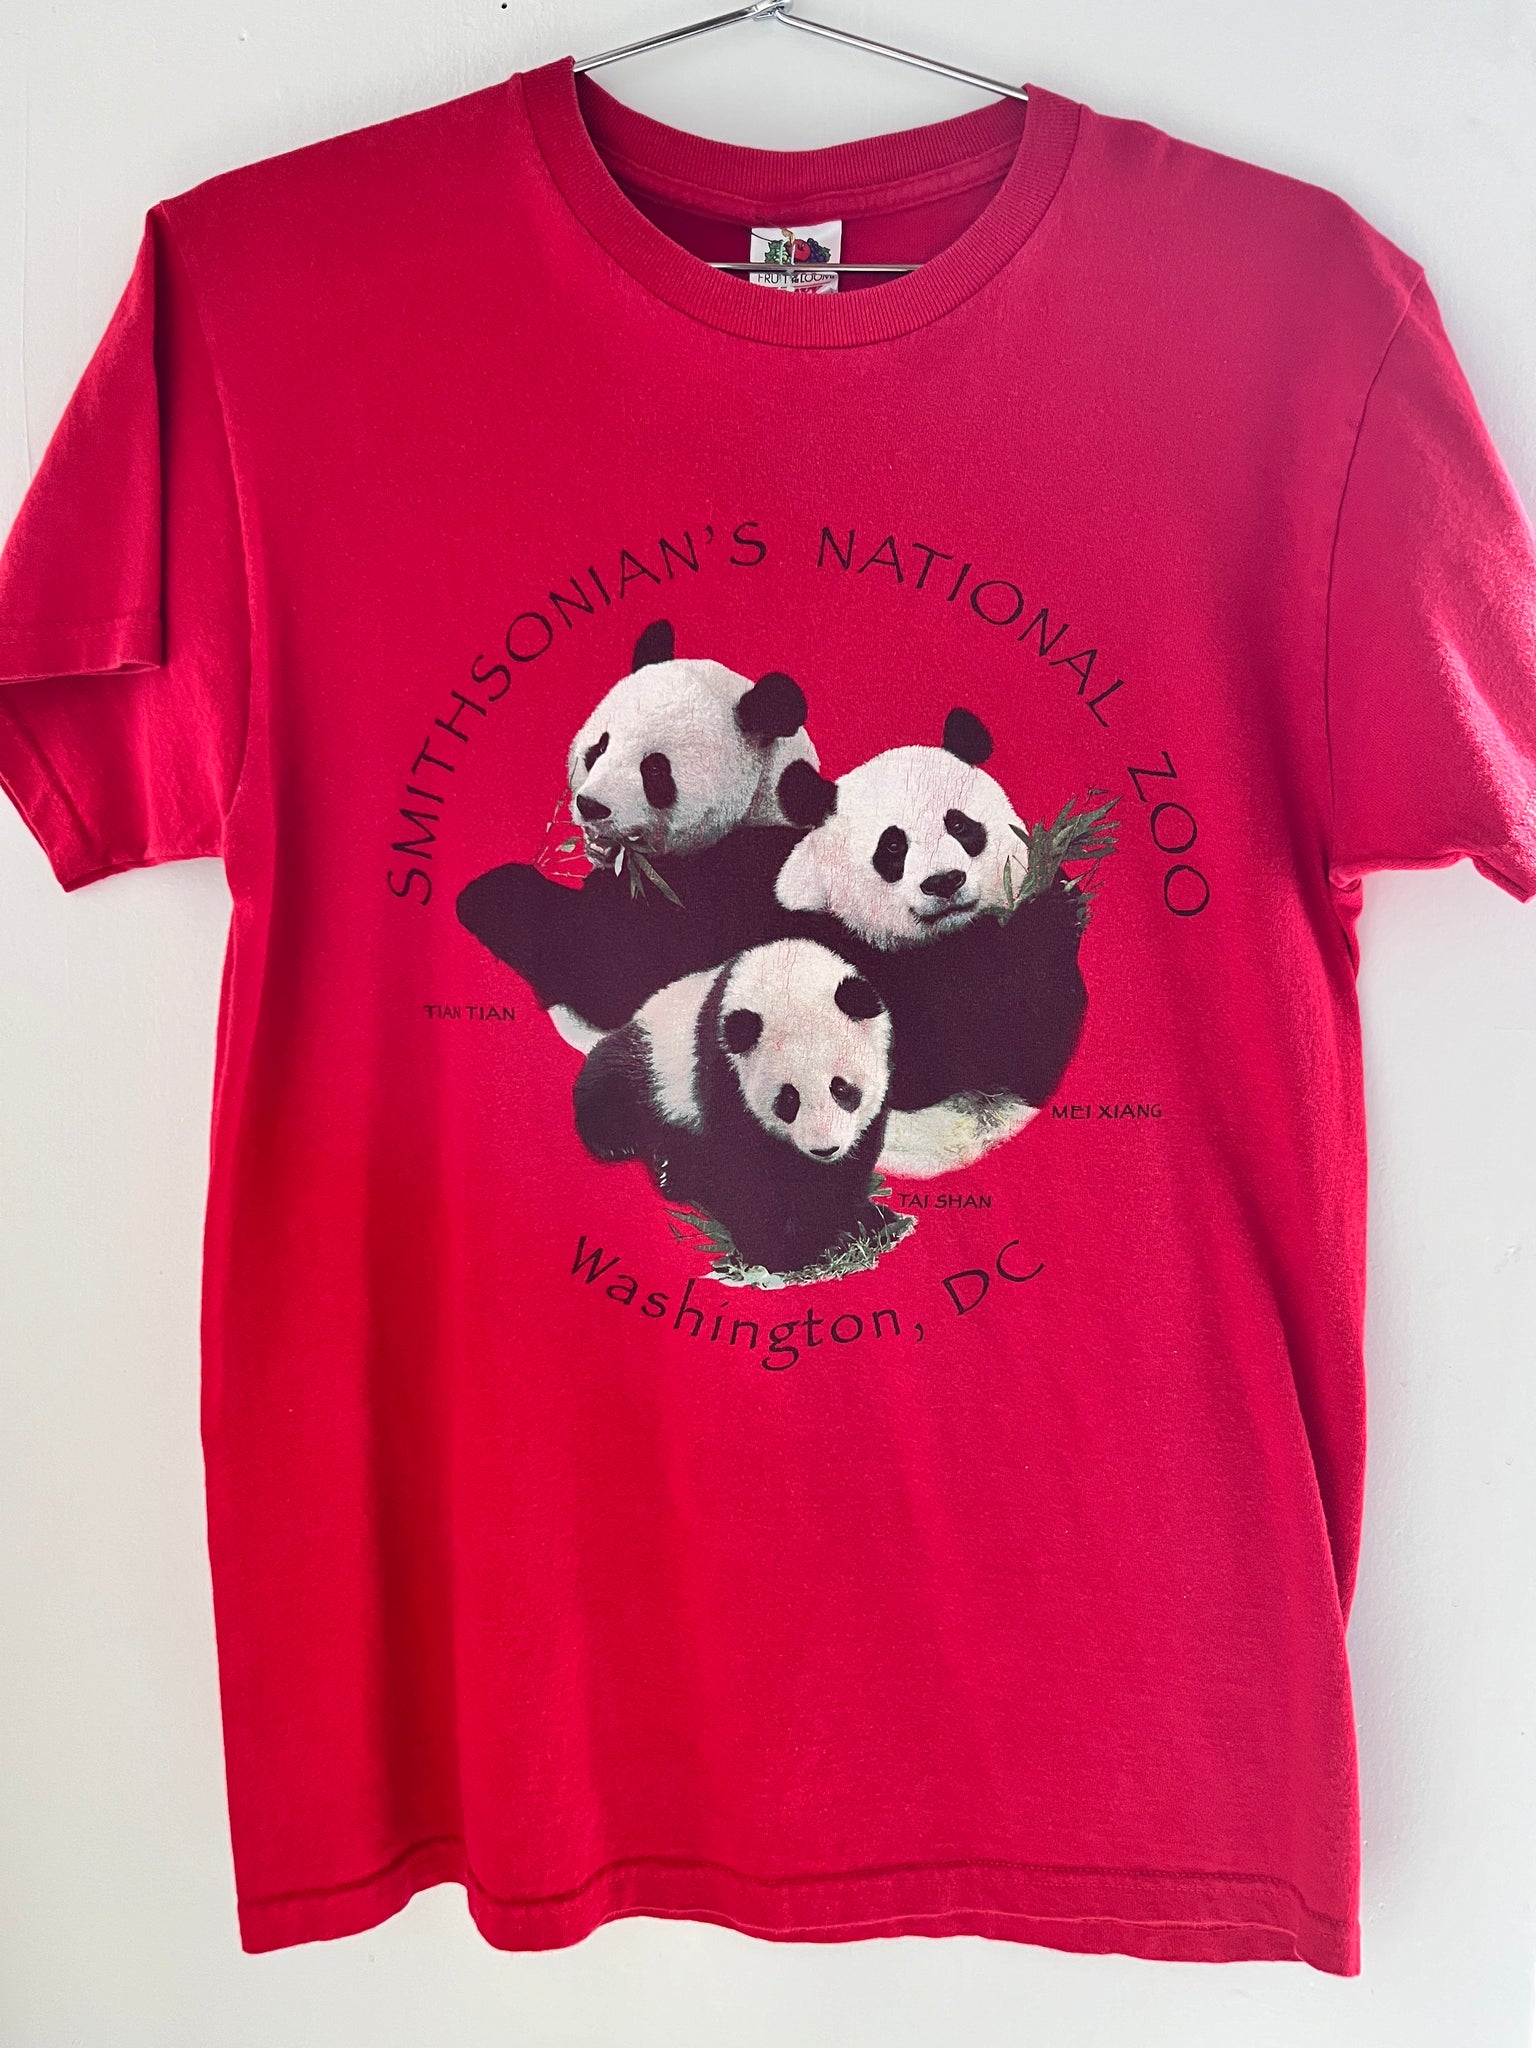 1990s medium Smithsonian national zoo t shirt